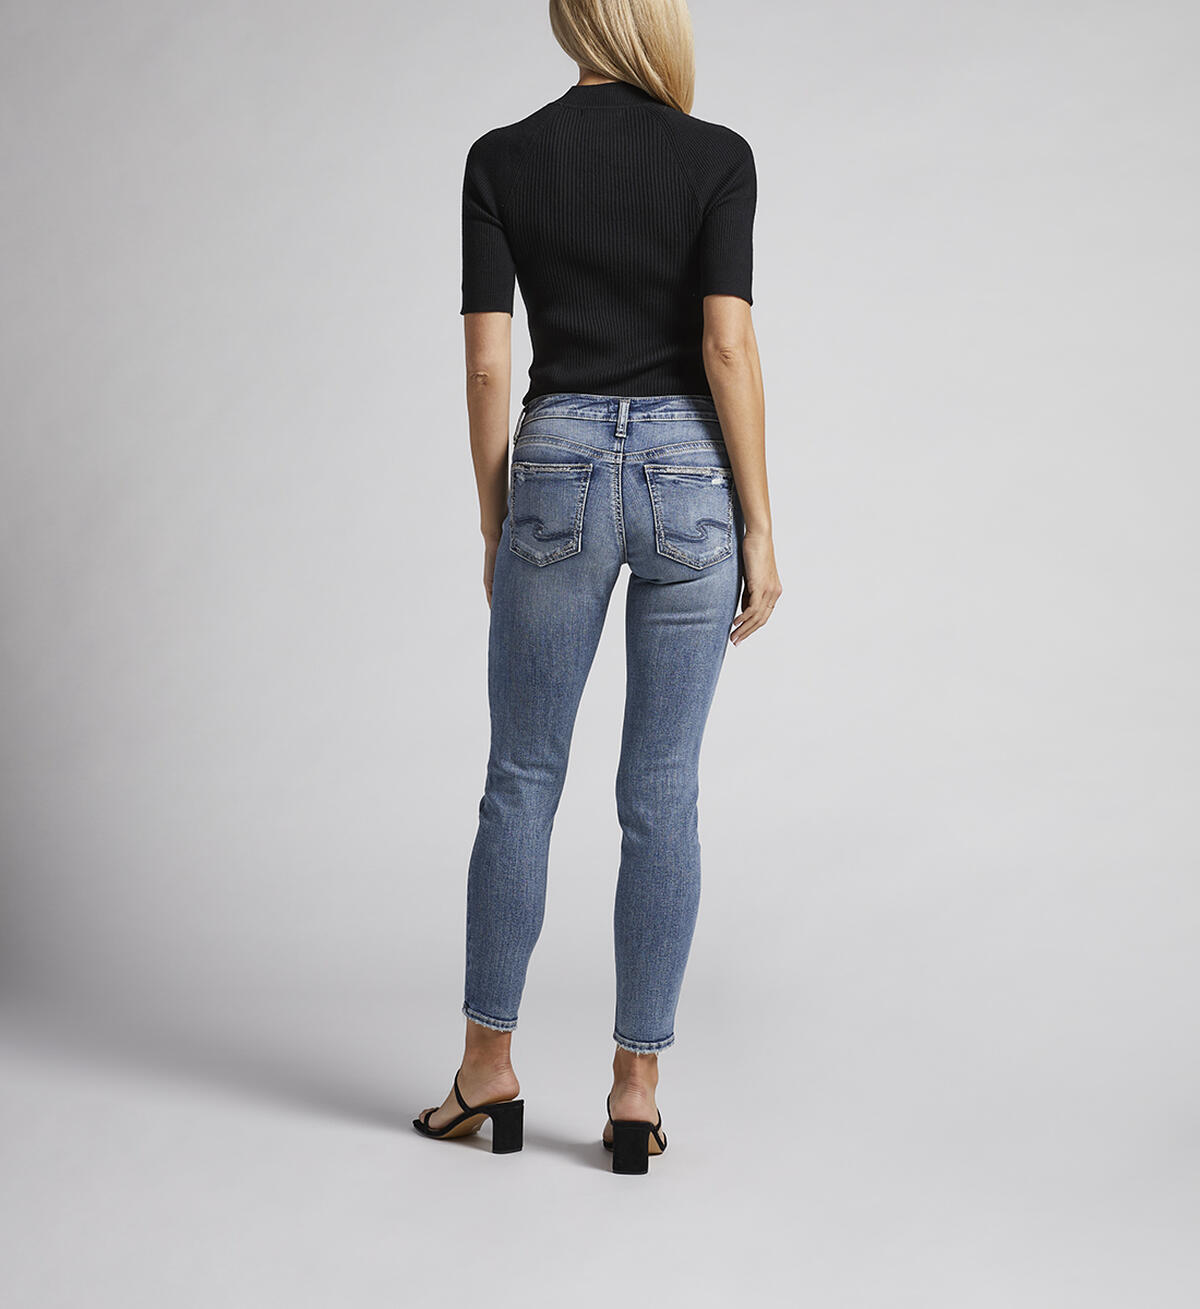 Britt Low Rise Skinny Jeans, Indigo, hi-res image number 1